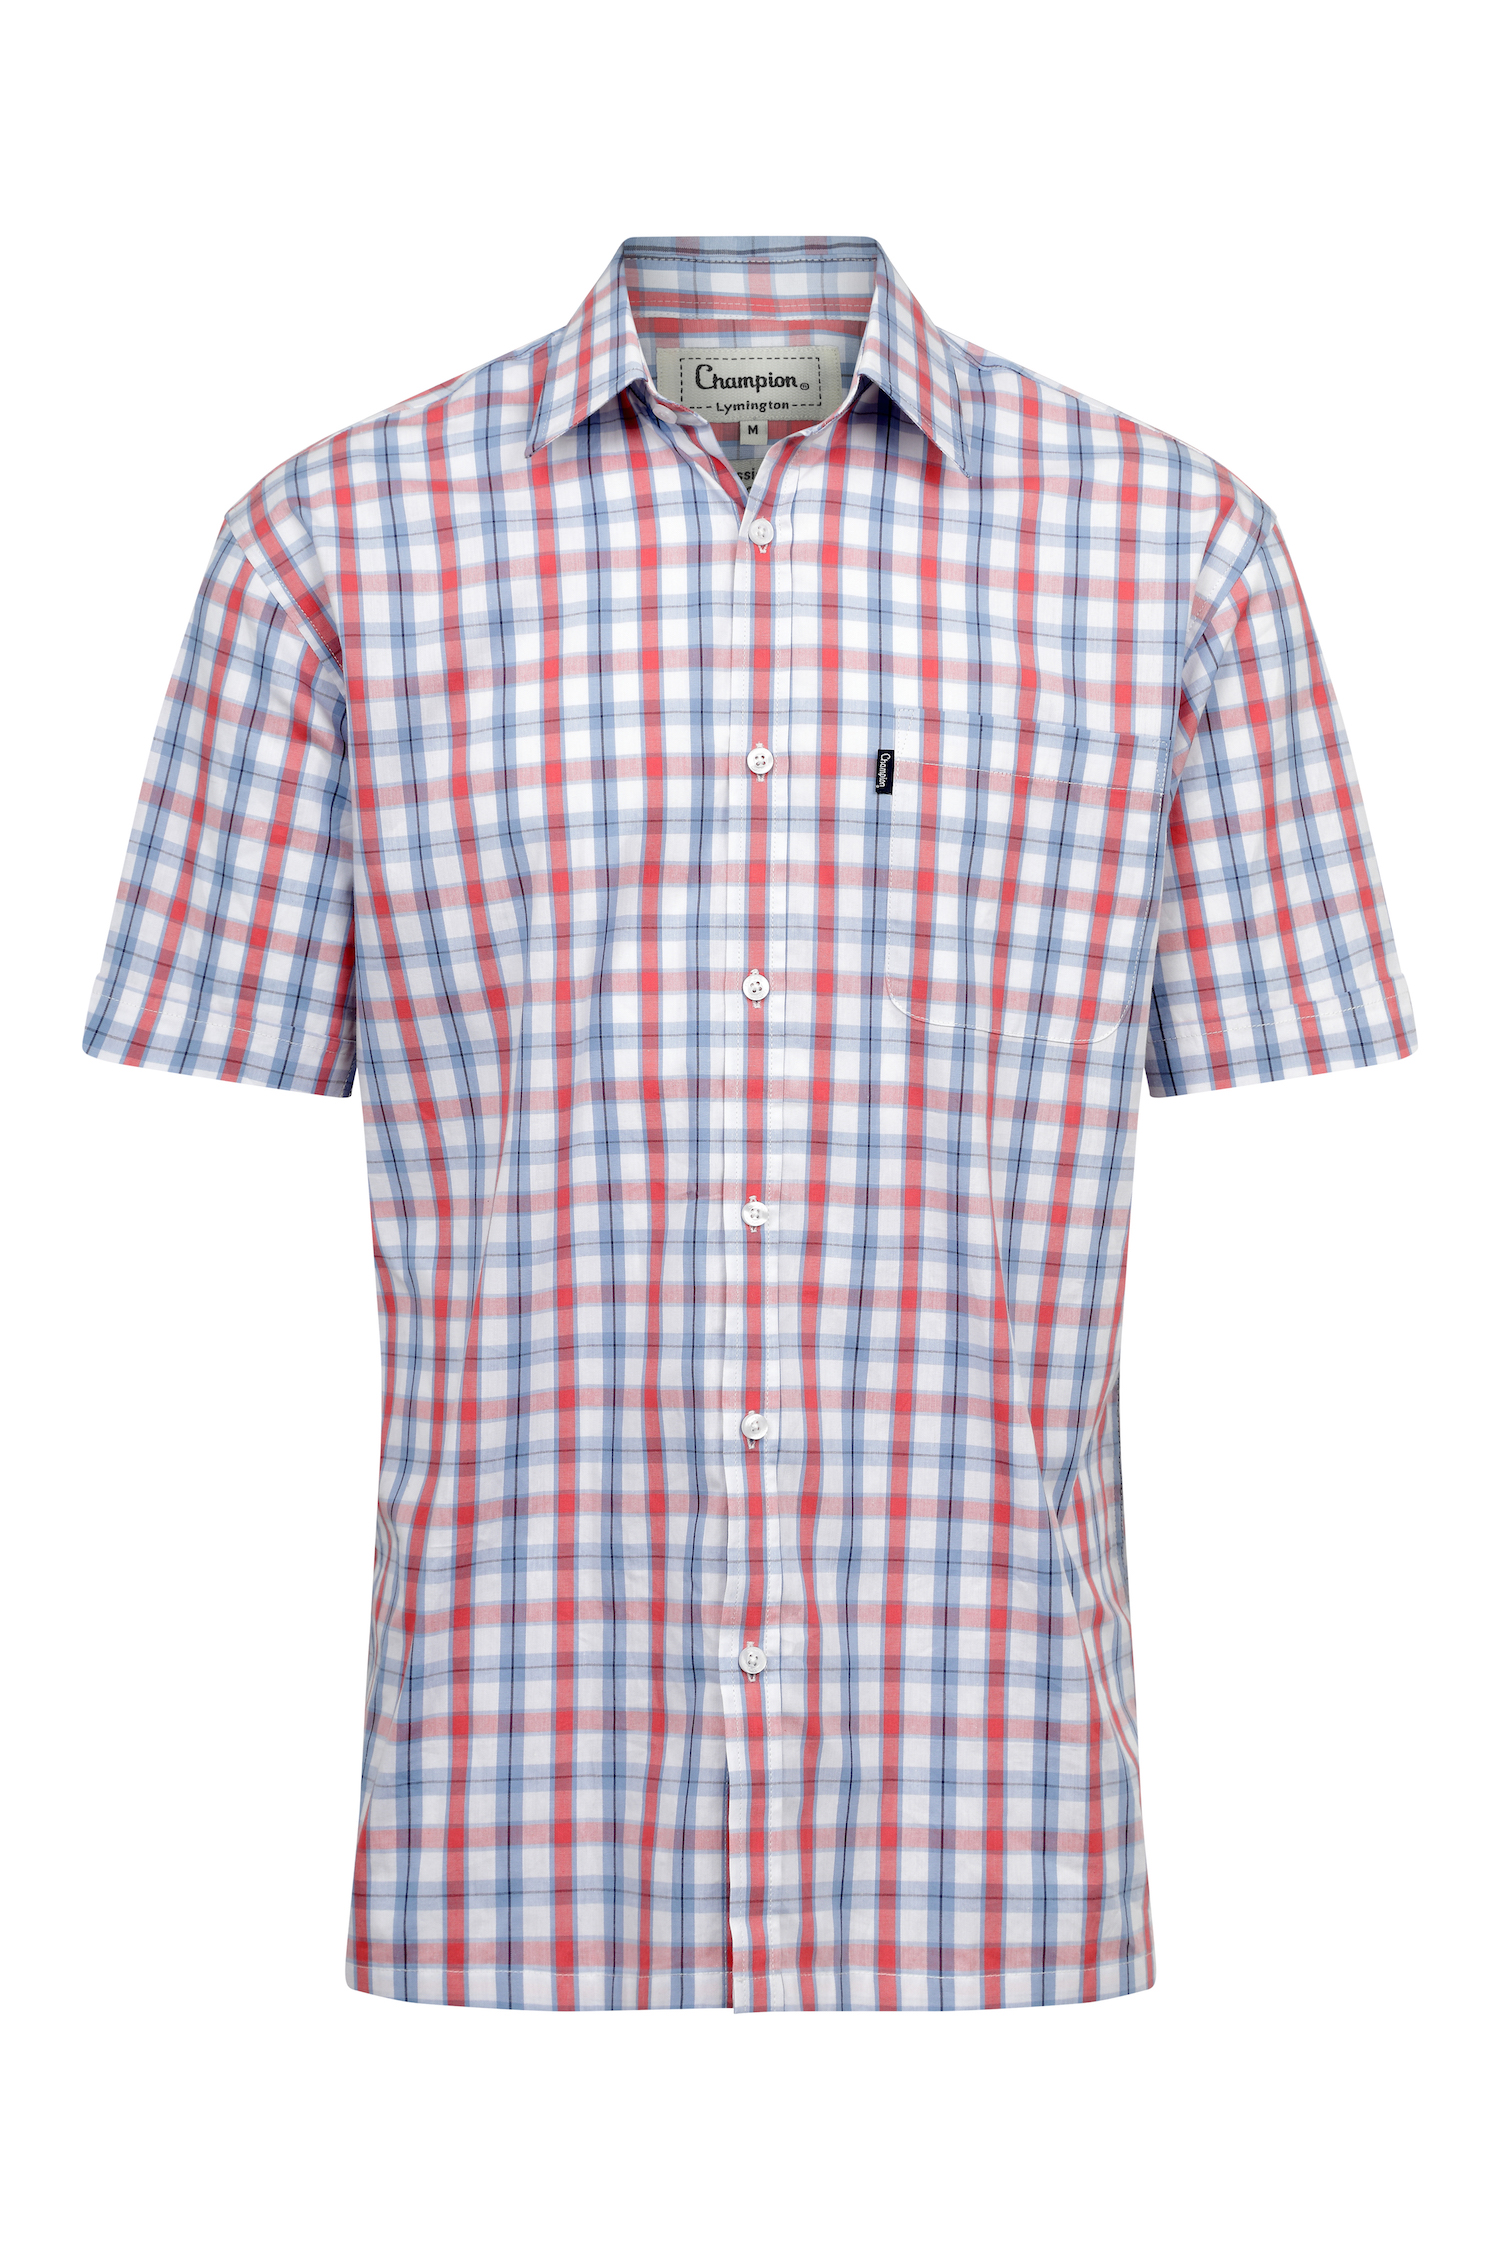 Champion Lymington Short Sleeve Shirt Coral - Edinburgh Outdoor Wear